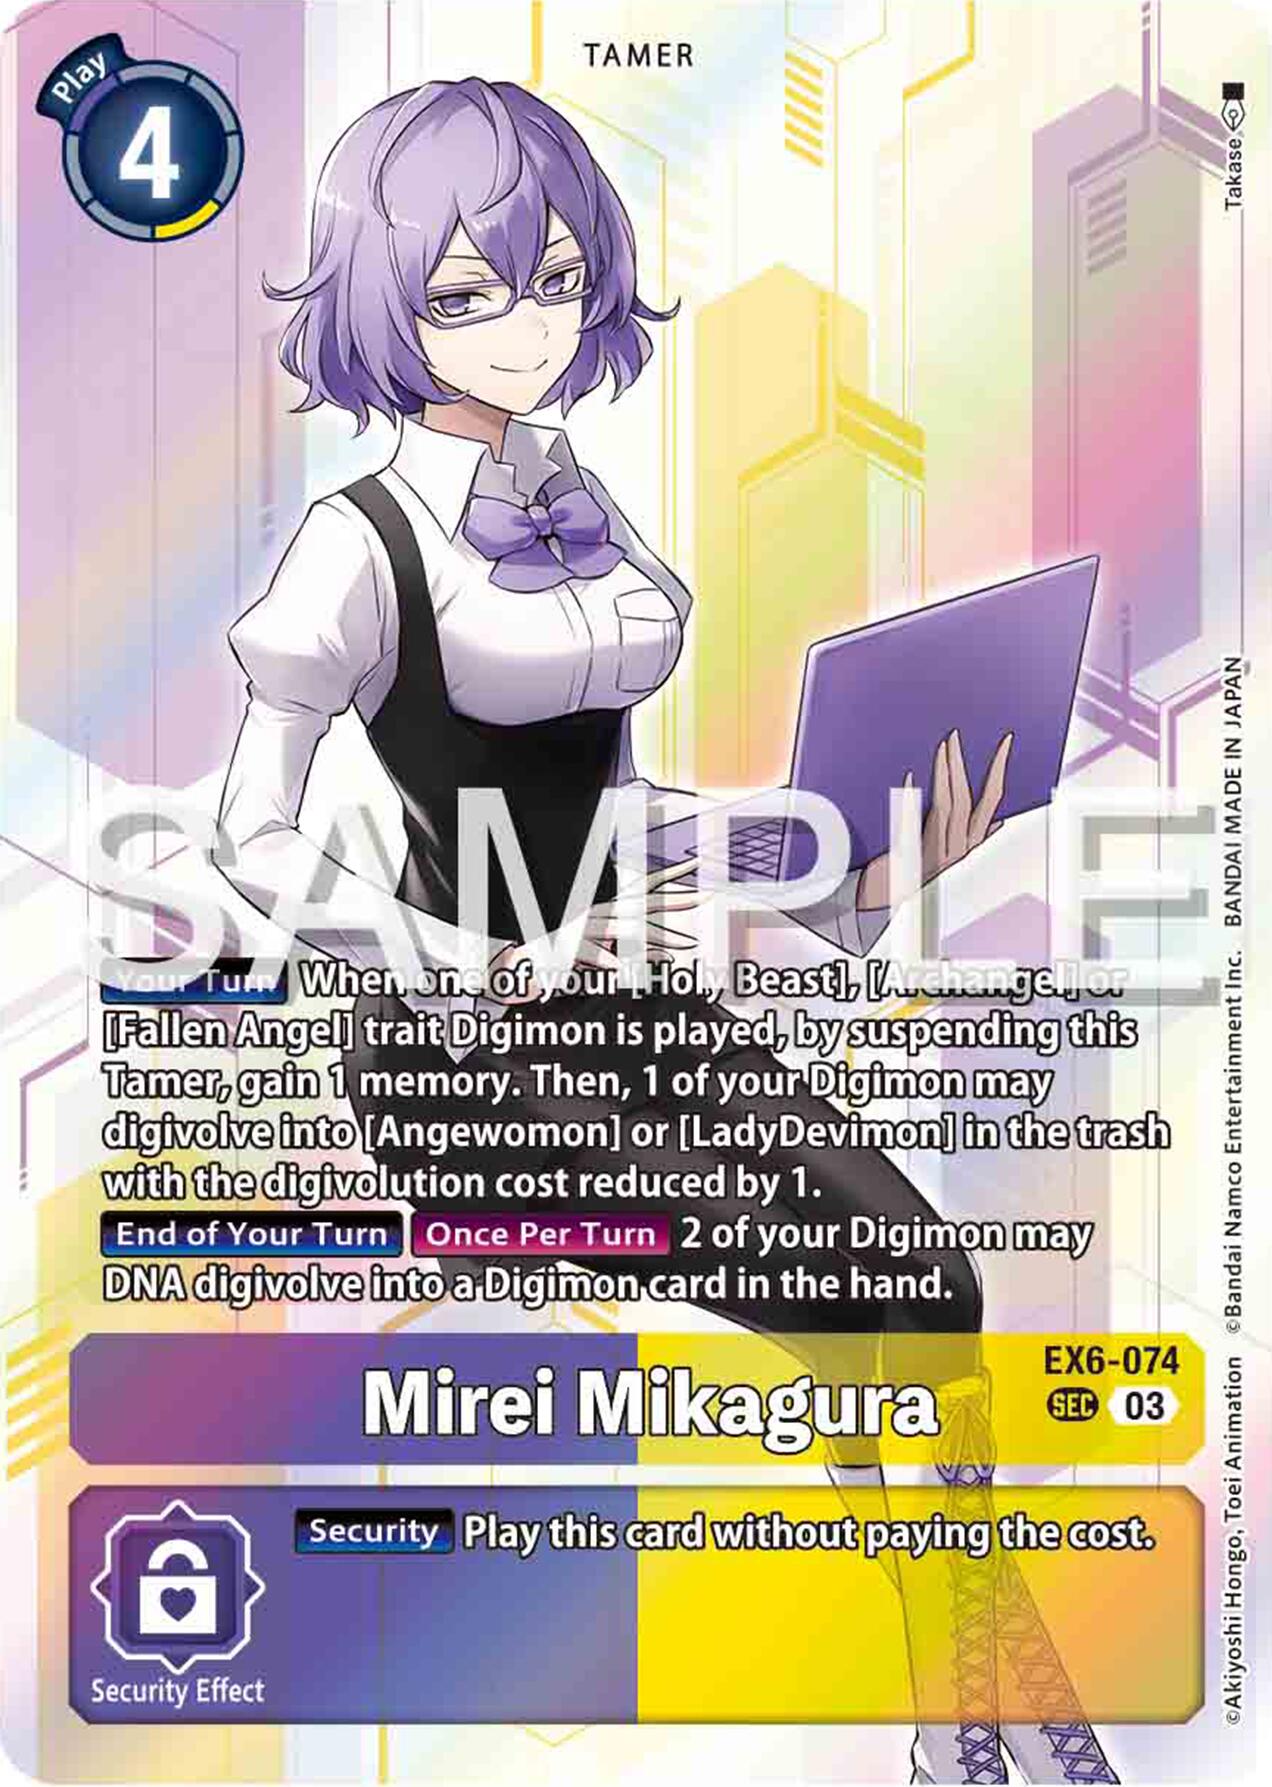 Mirei Mikagura [EX6-074] [Infernal Ascension] | Mindsight Gaming